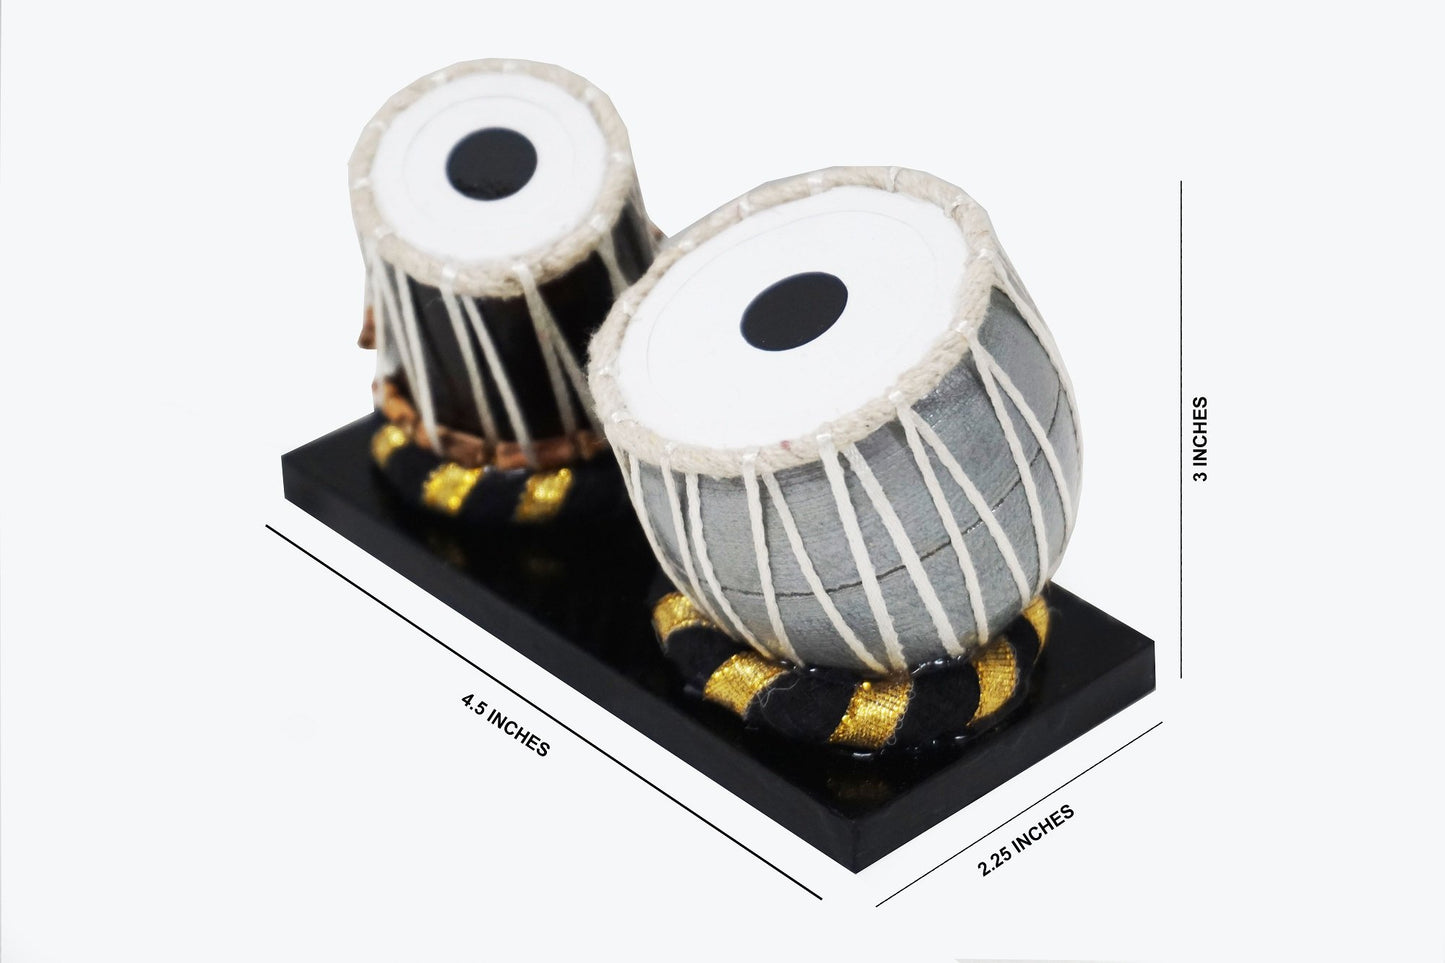 Nakshi Wooden Dugi Tabla Set Handcrafted Miniature Musical Instrument Showpiece 4.5"x3"x2.25"